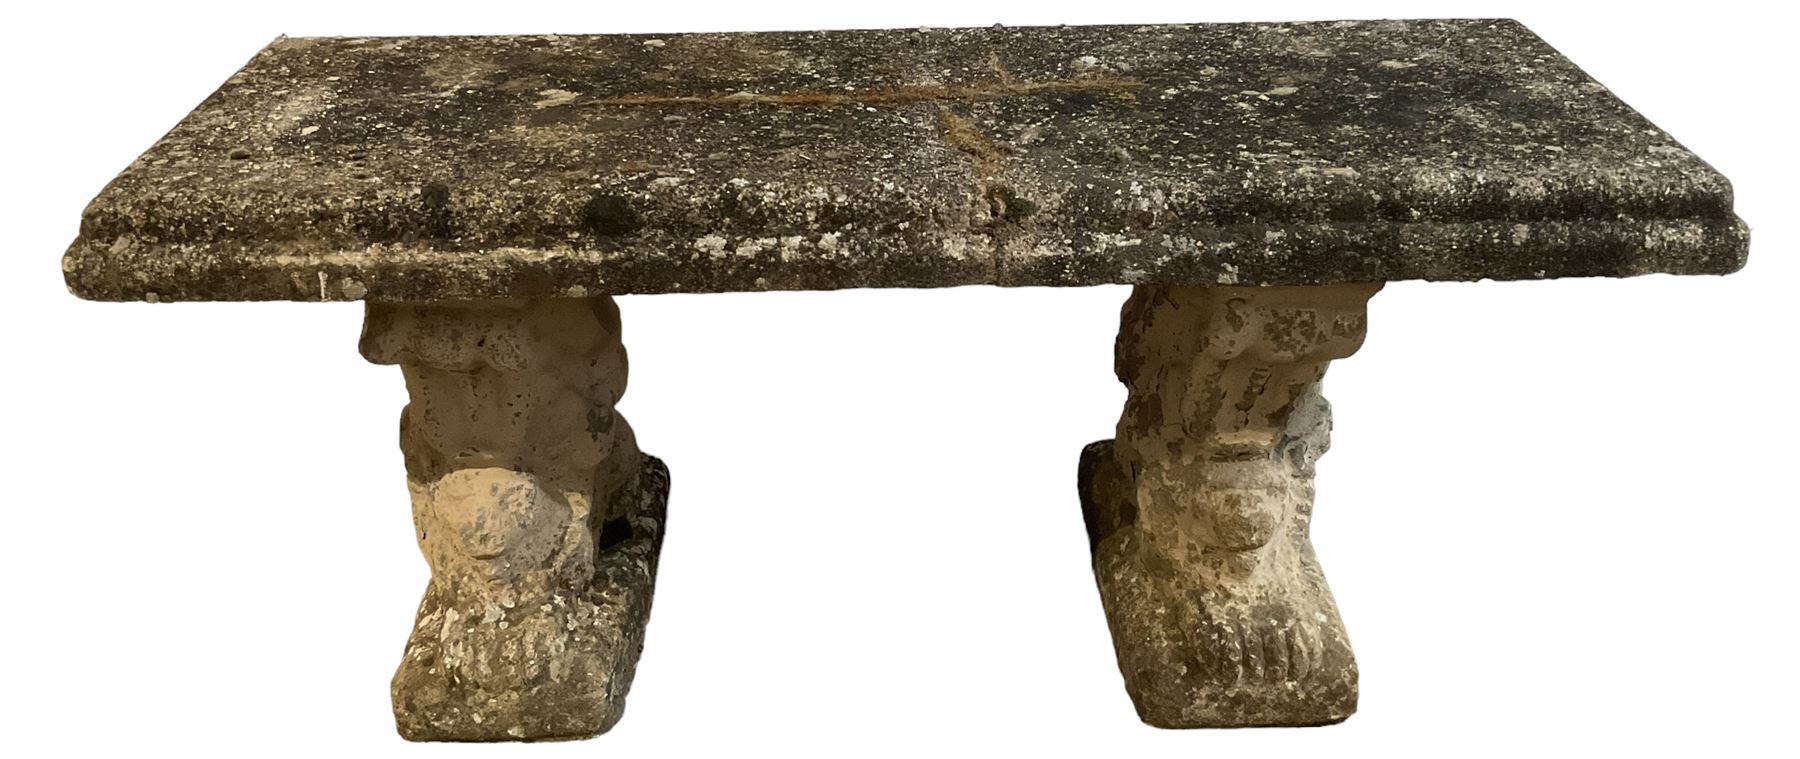 Three-piece weathered cast stone garden bench - Image 2 of 4